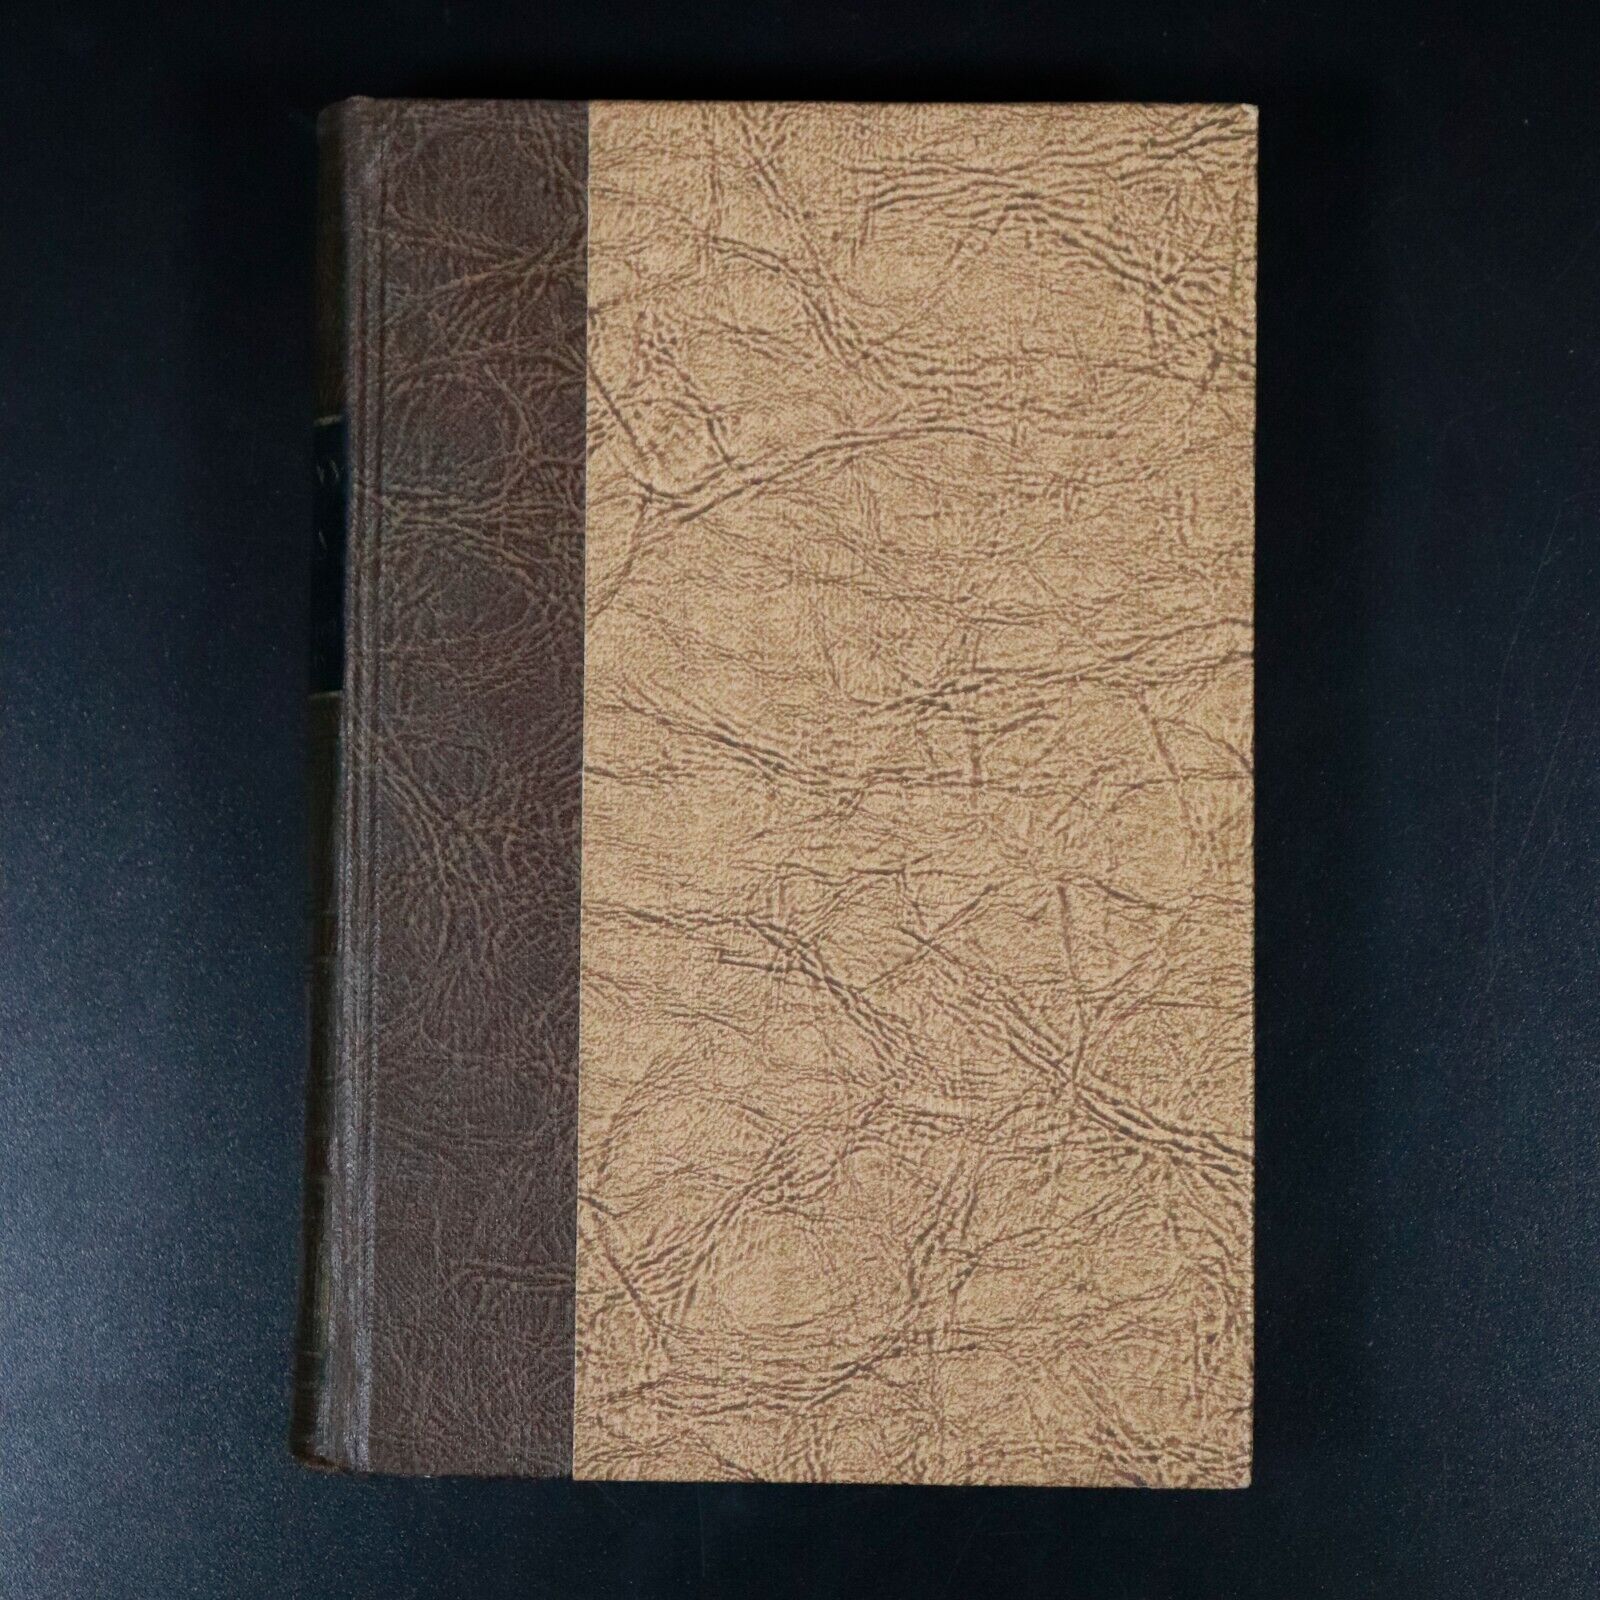 c1950 Emerson's Essays R.W. Emerson - Art Type Edition - Vintage Philosophy Book